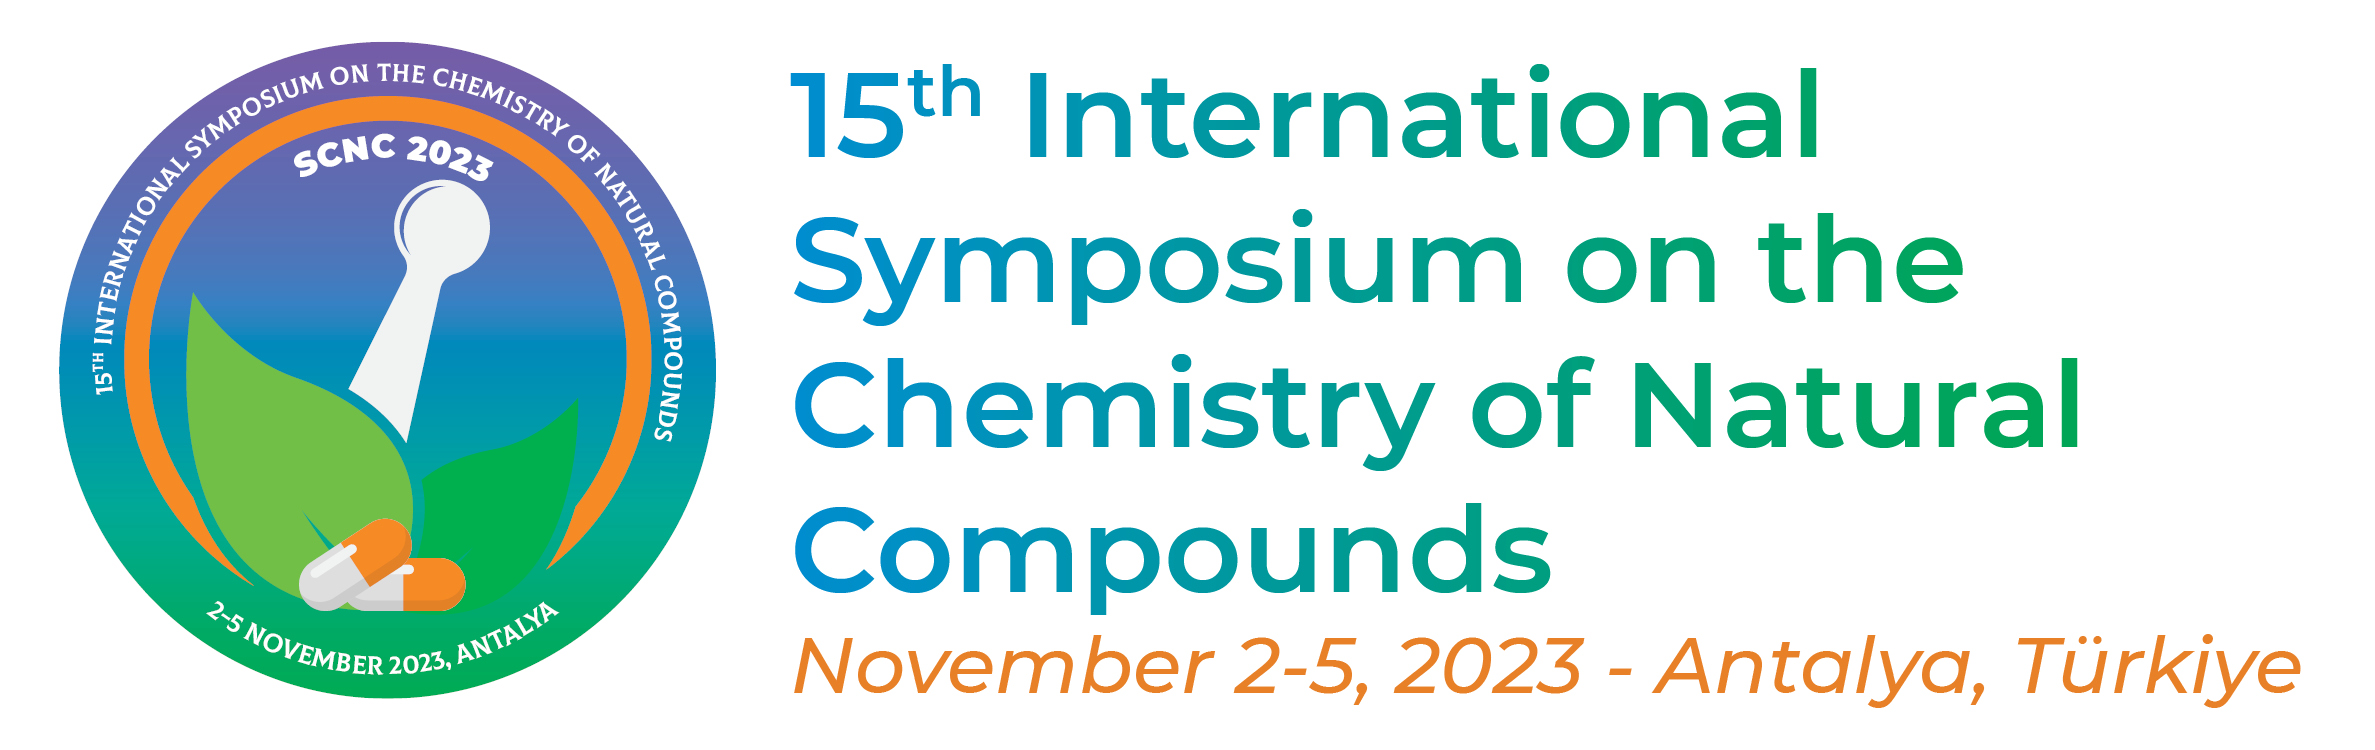 15th International Symposium on the Chemistry of Natural Compounds (SCNC 2023) - 2-5 November 2023, Antalya - Turkiye